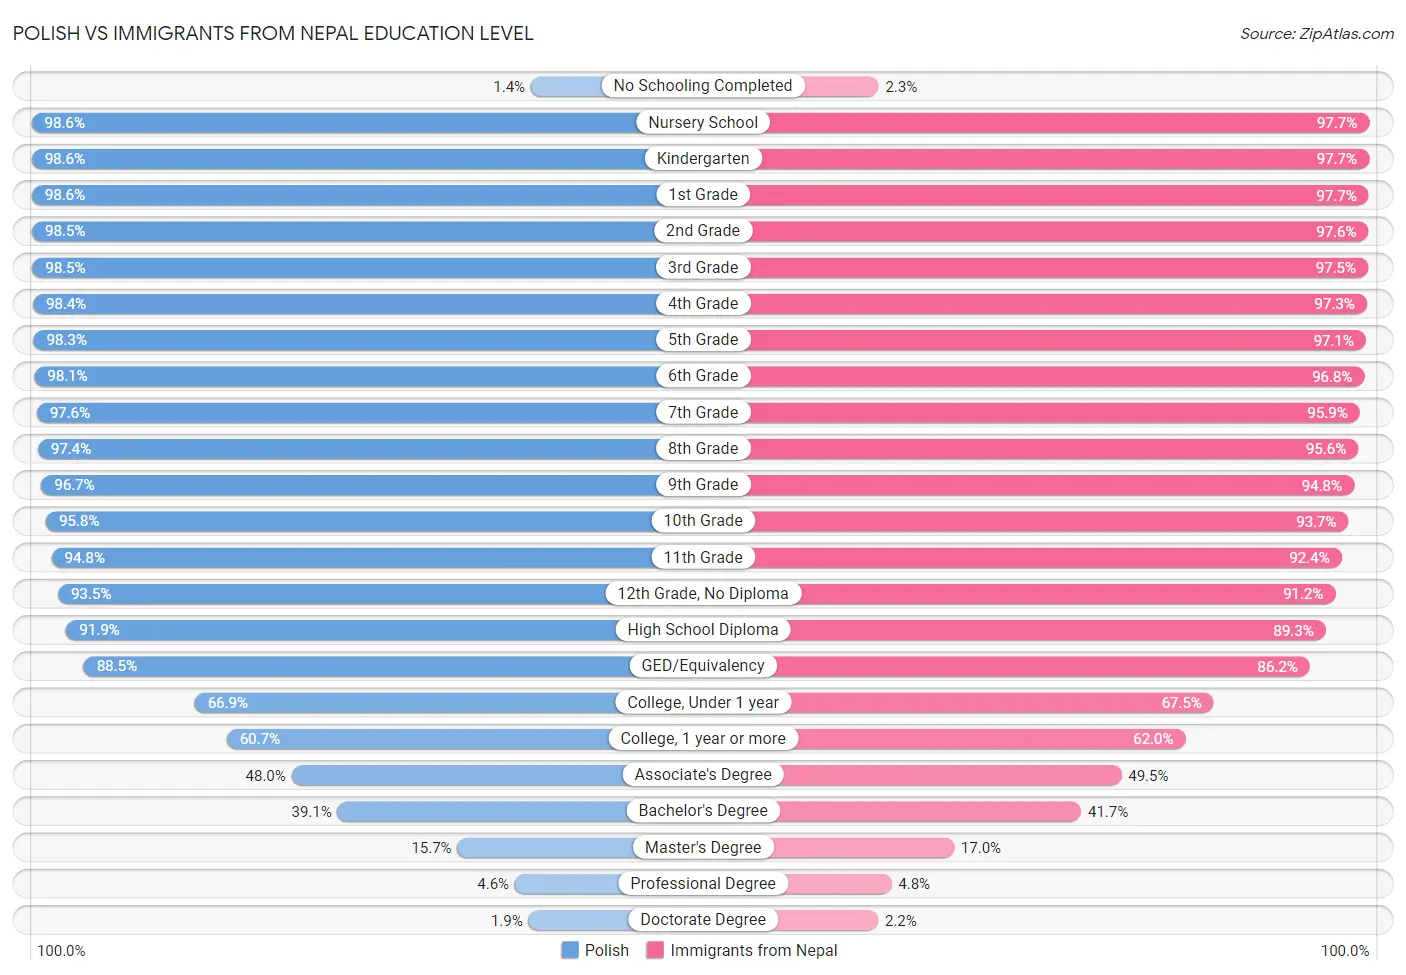 Polish vs Immigrants from Nepal Education Level